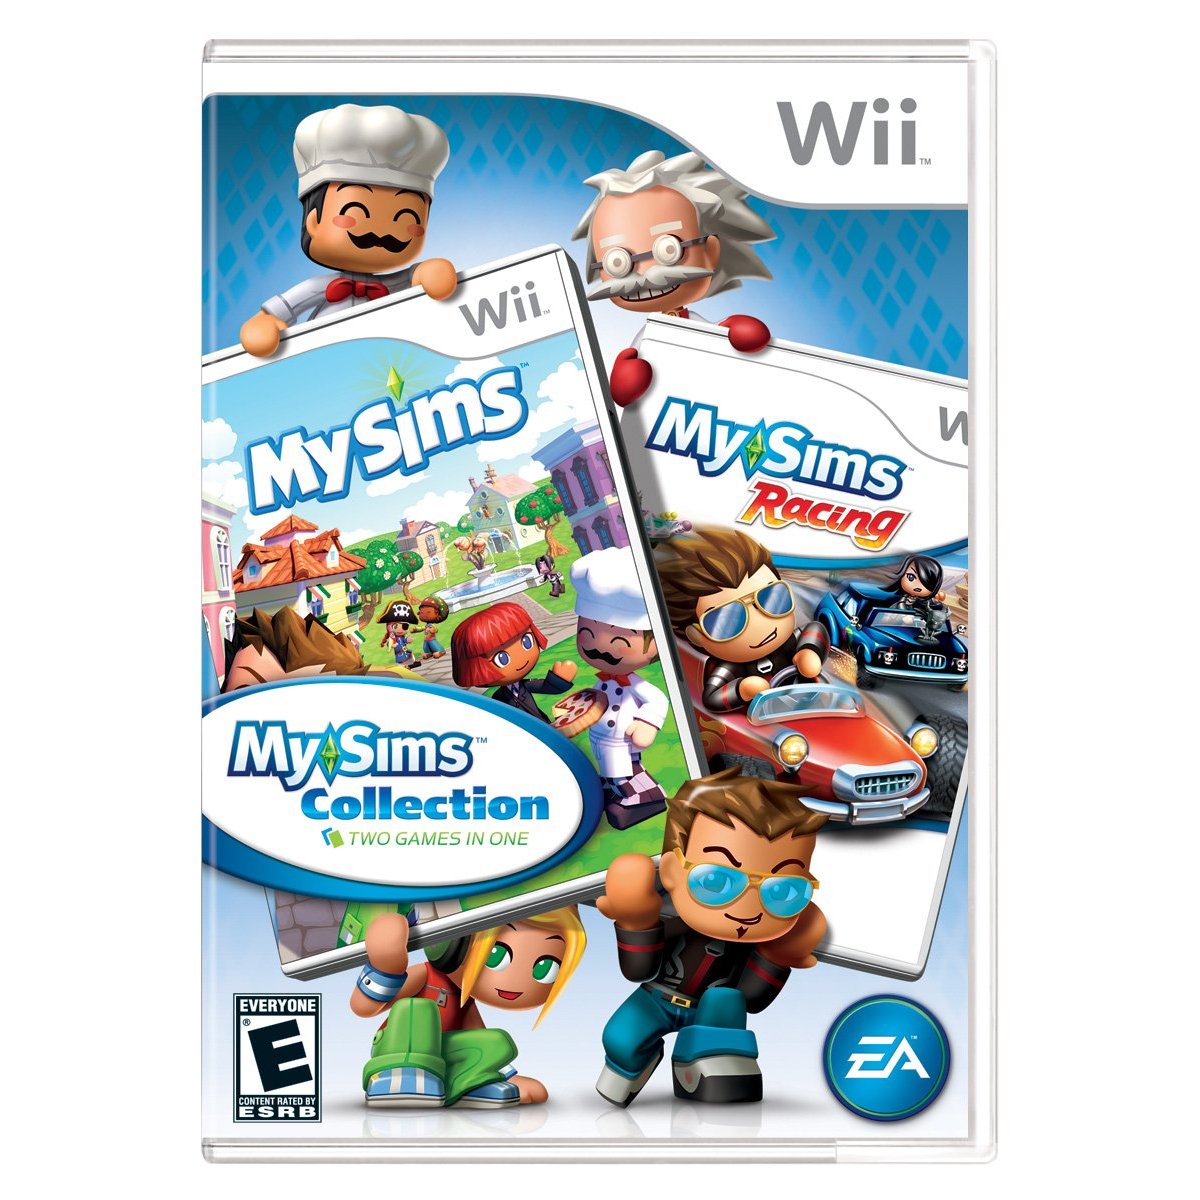 Download wii games. Wii игры. The SIMS для Wii. Wii game Sealed.